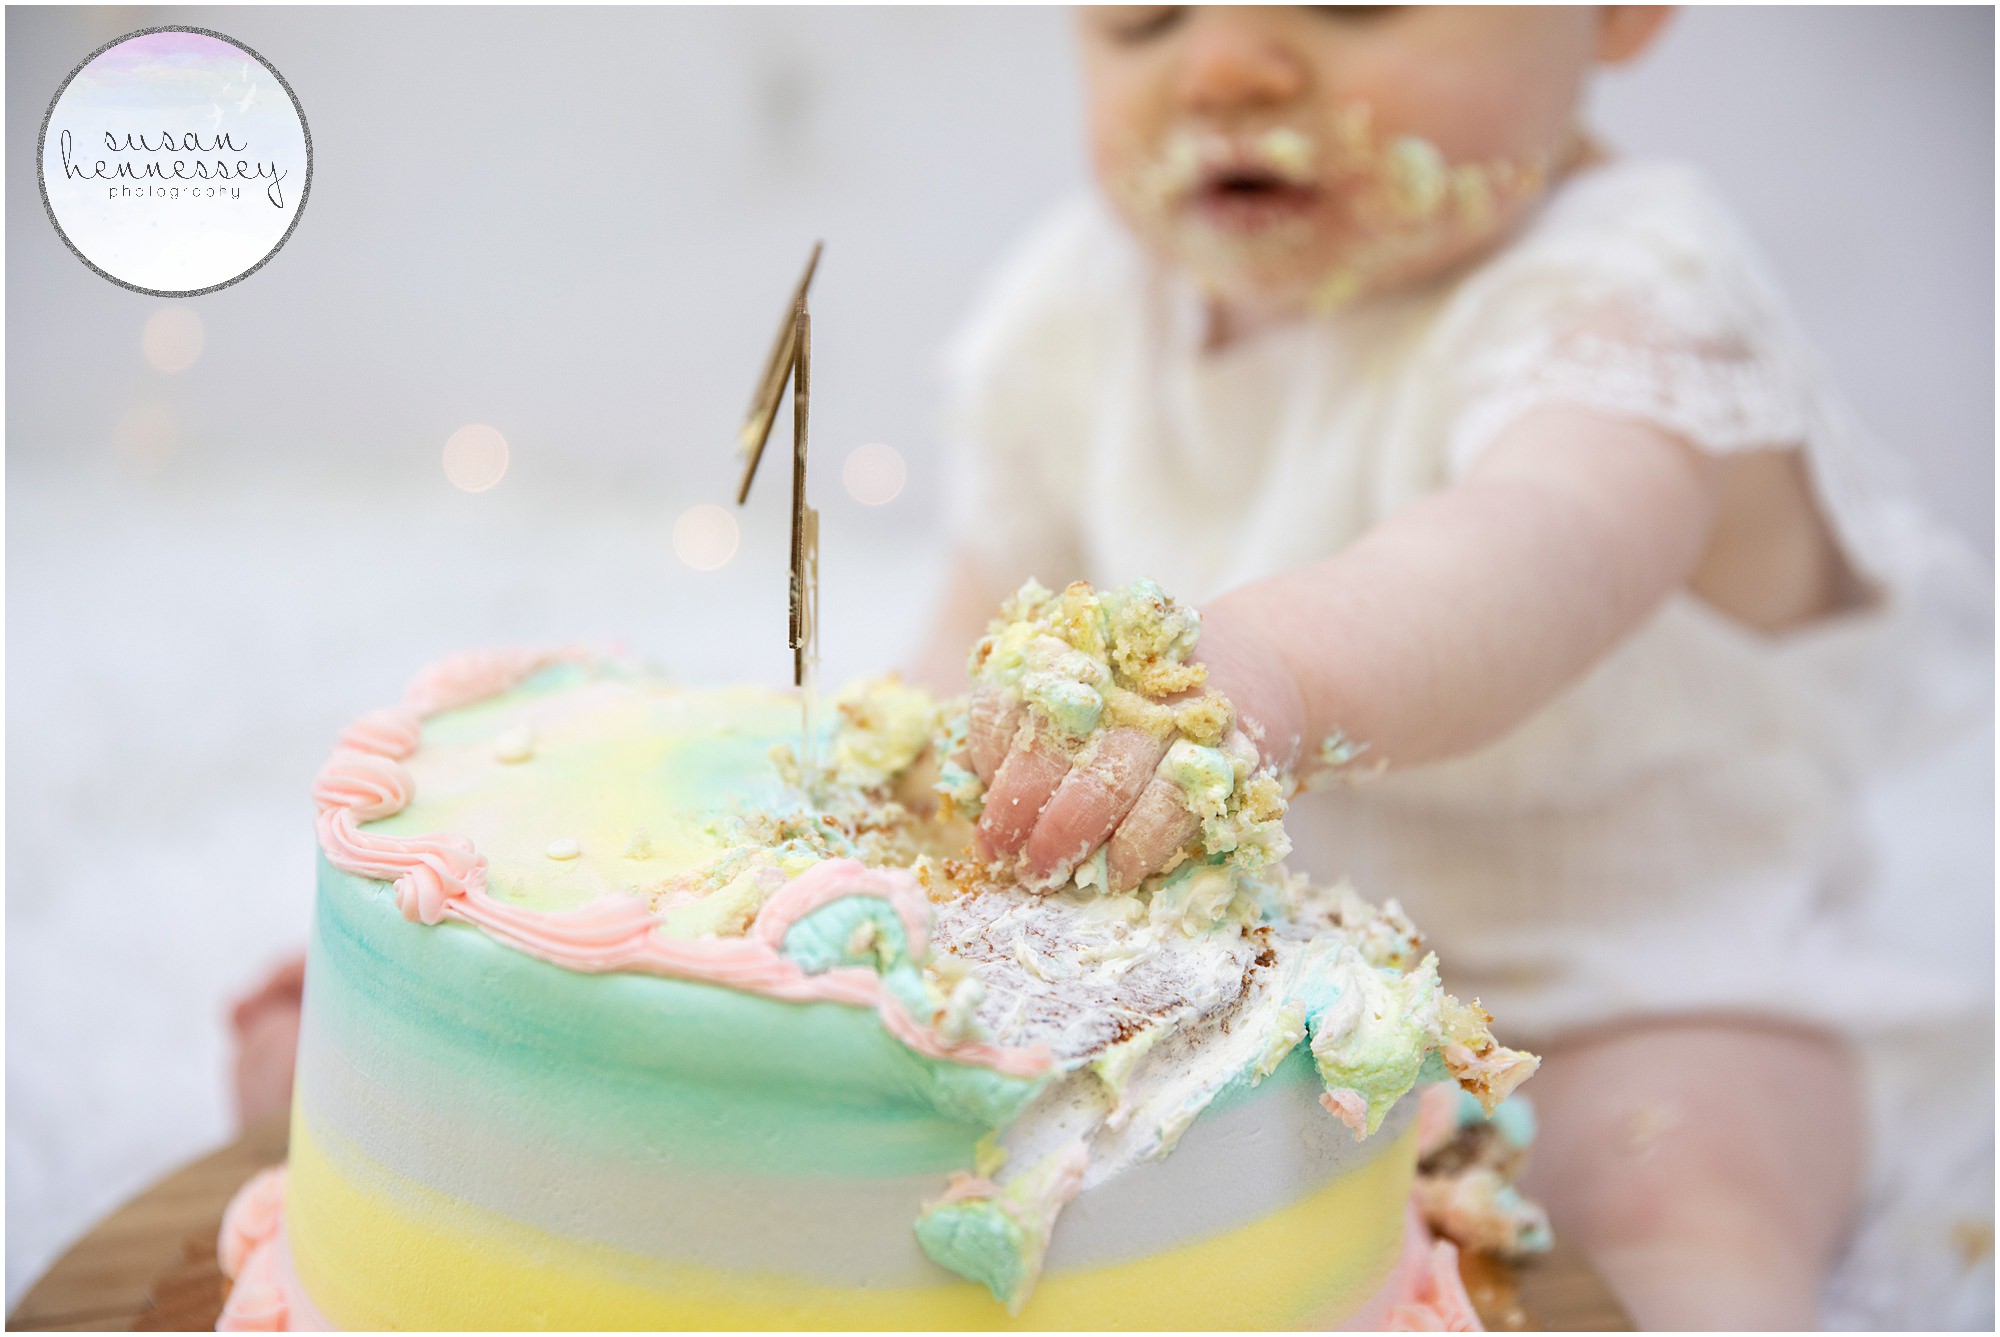 Cake smash photgeraphy session featuring a rainbow backdrop